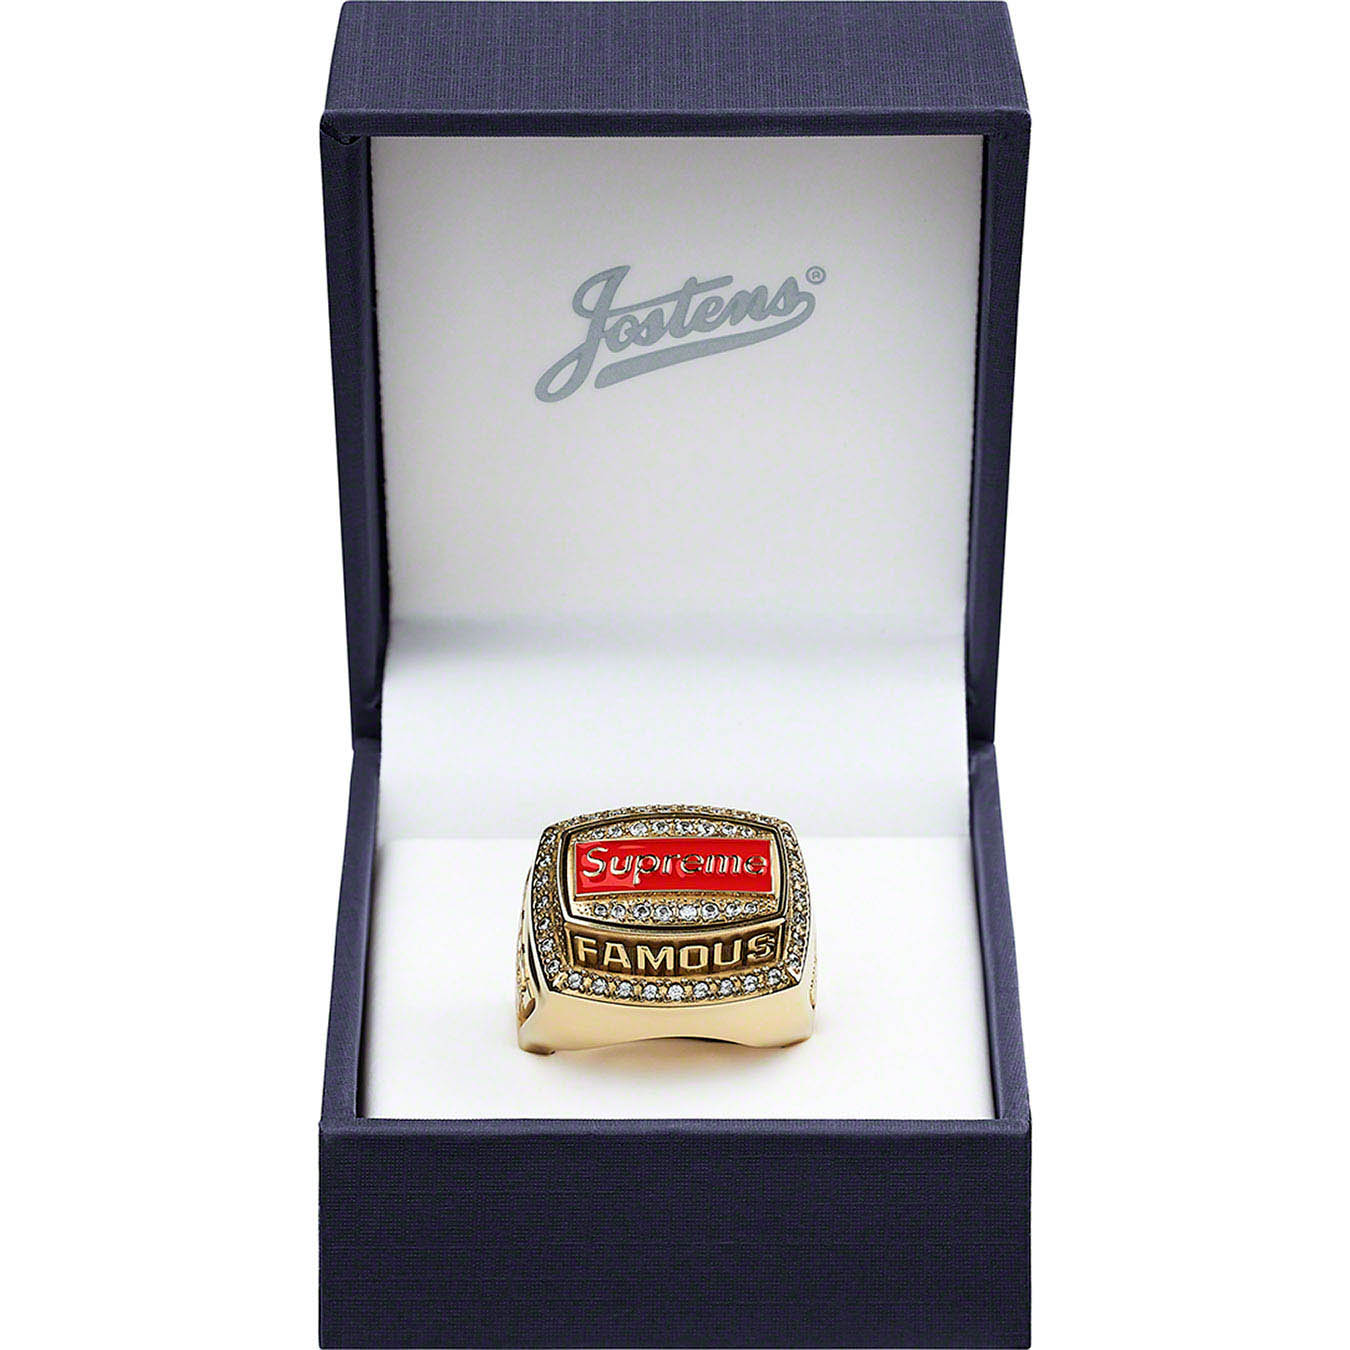 Supreme®/Jostens World Famous Champion Ring